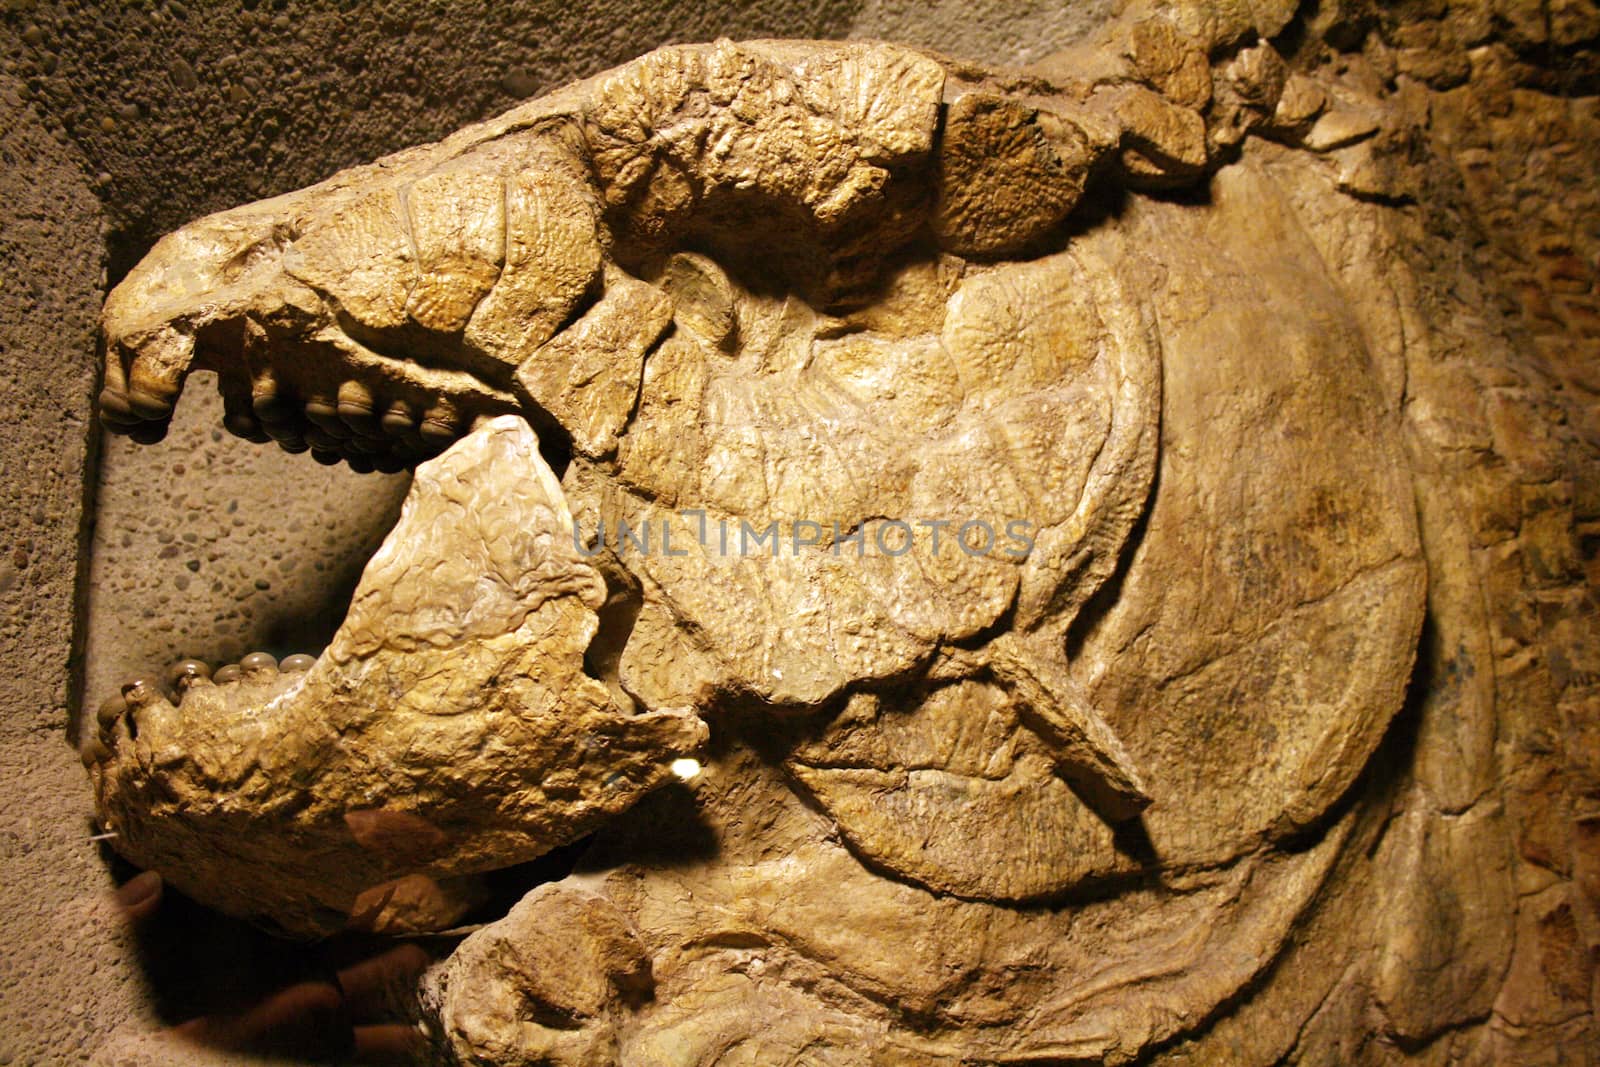 Mammal fossil by draskovic